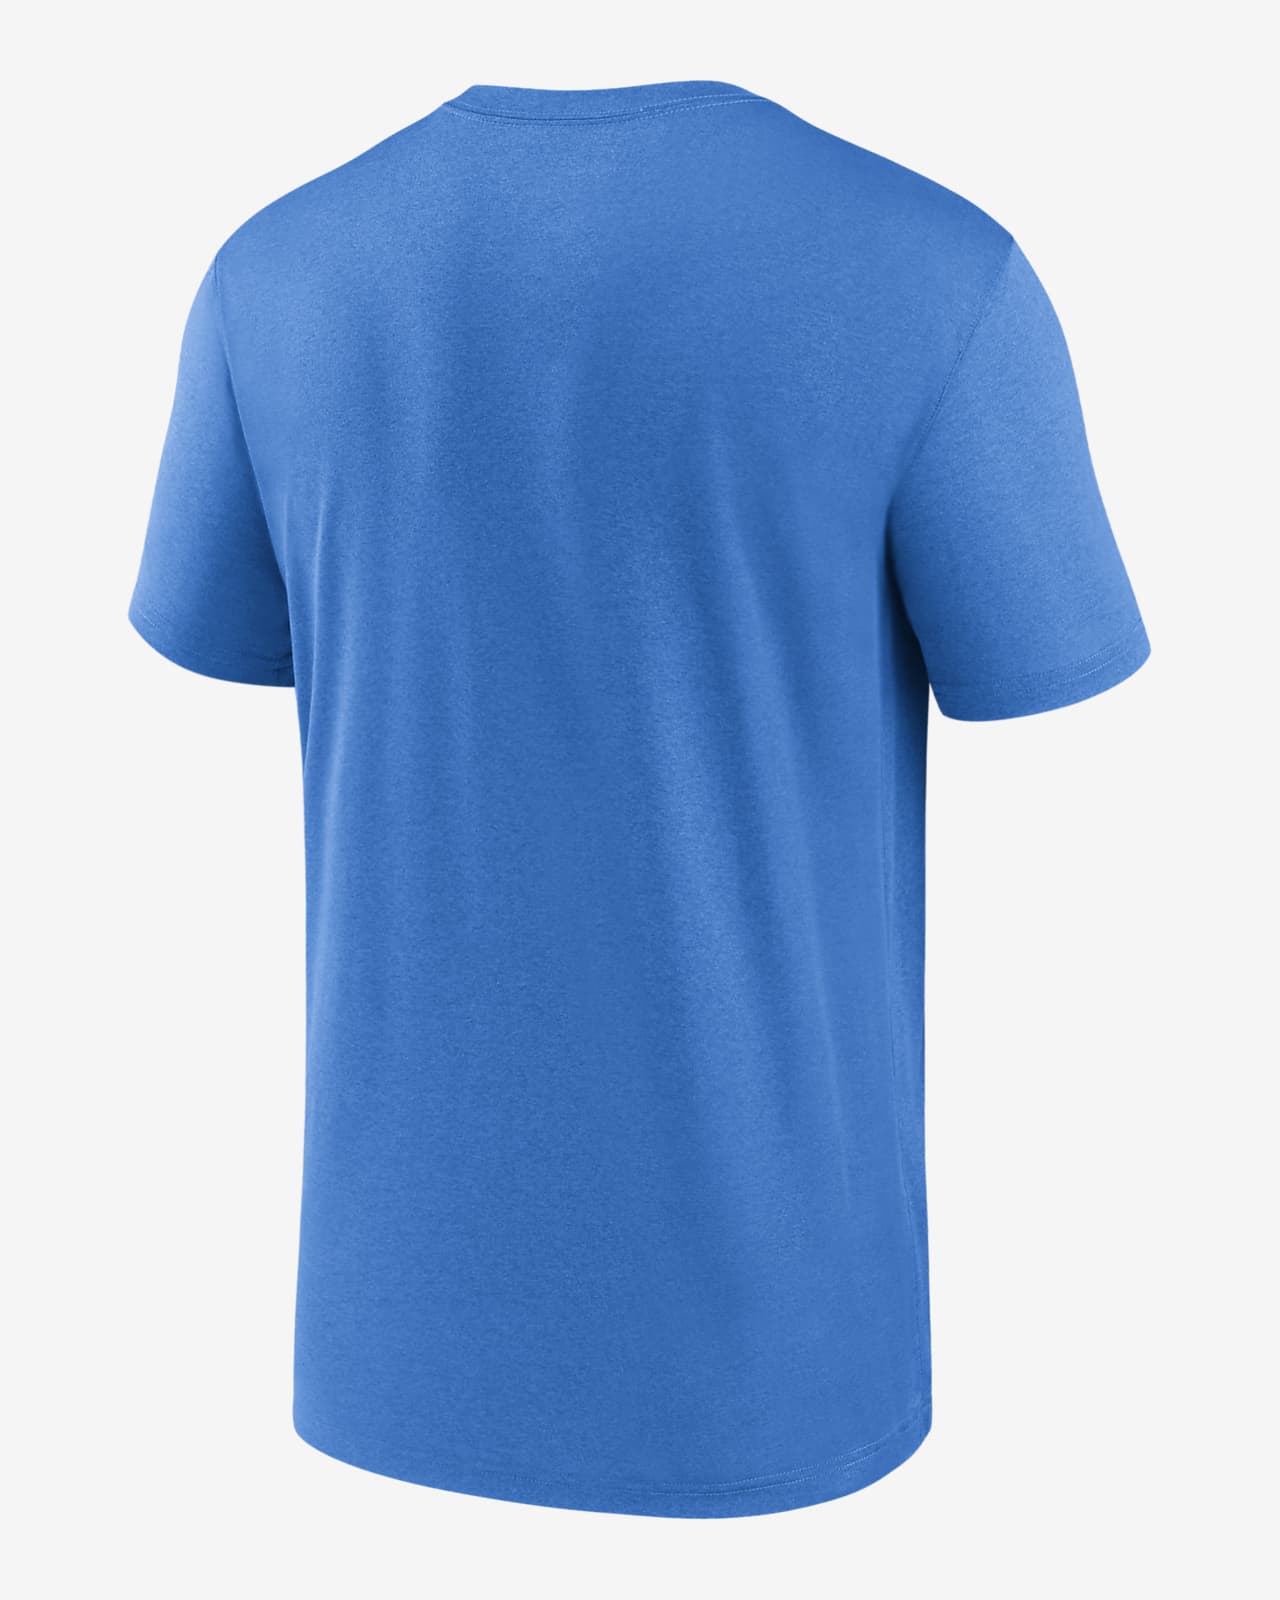 side synder snak Nike Dri-FIT Wordmark Legend (NFL Los Angeles Chargers) Men's T-Shirt. Nike .com